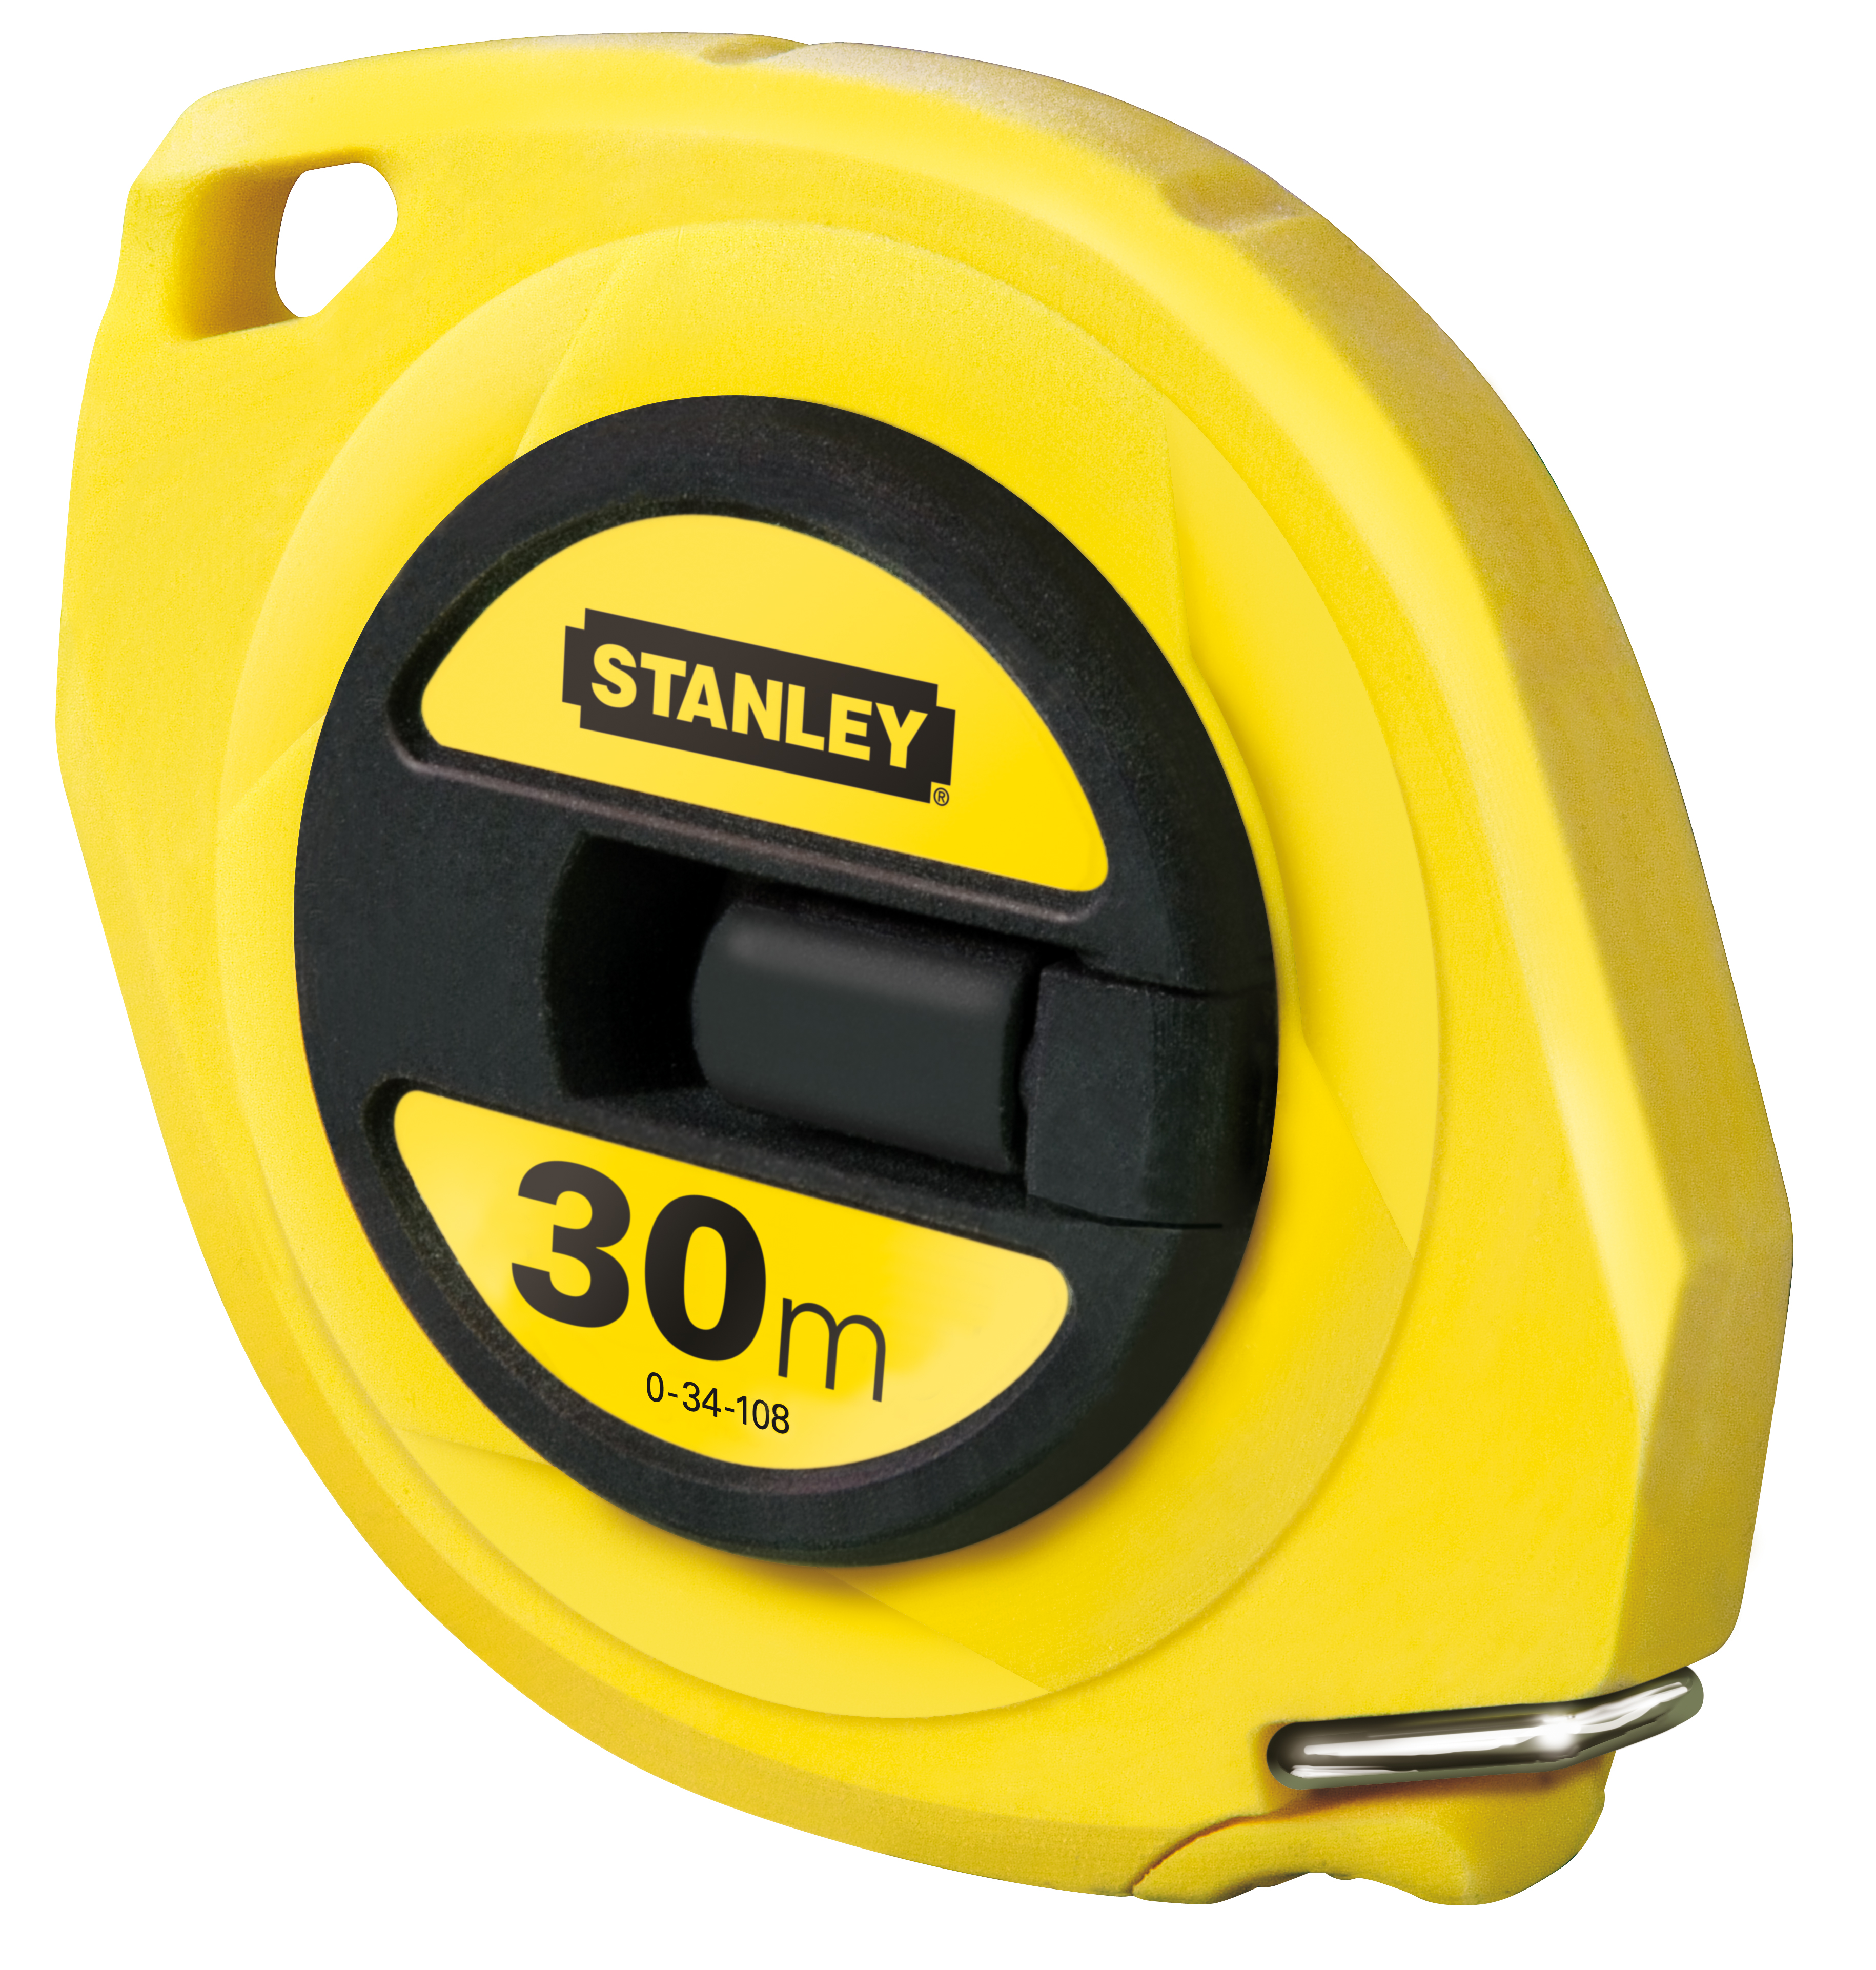 Stanley 0-34-108 målebånd 30m